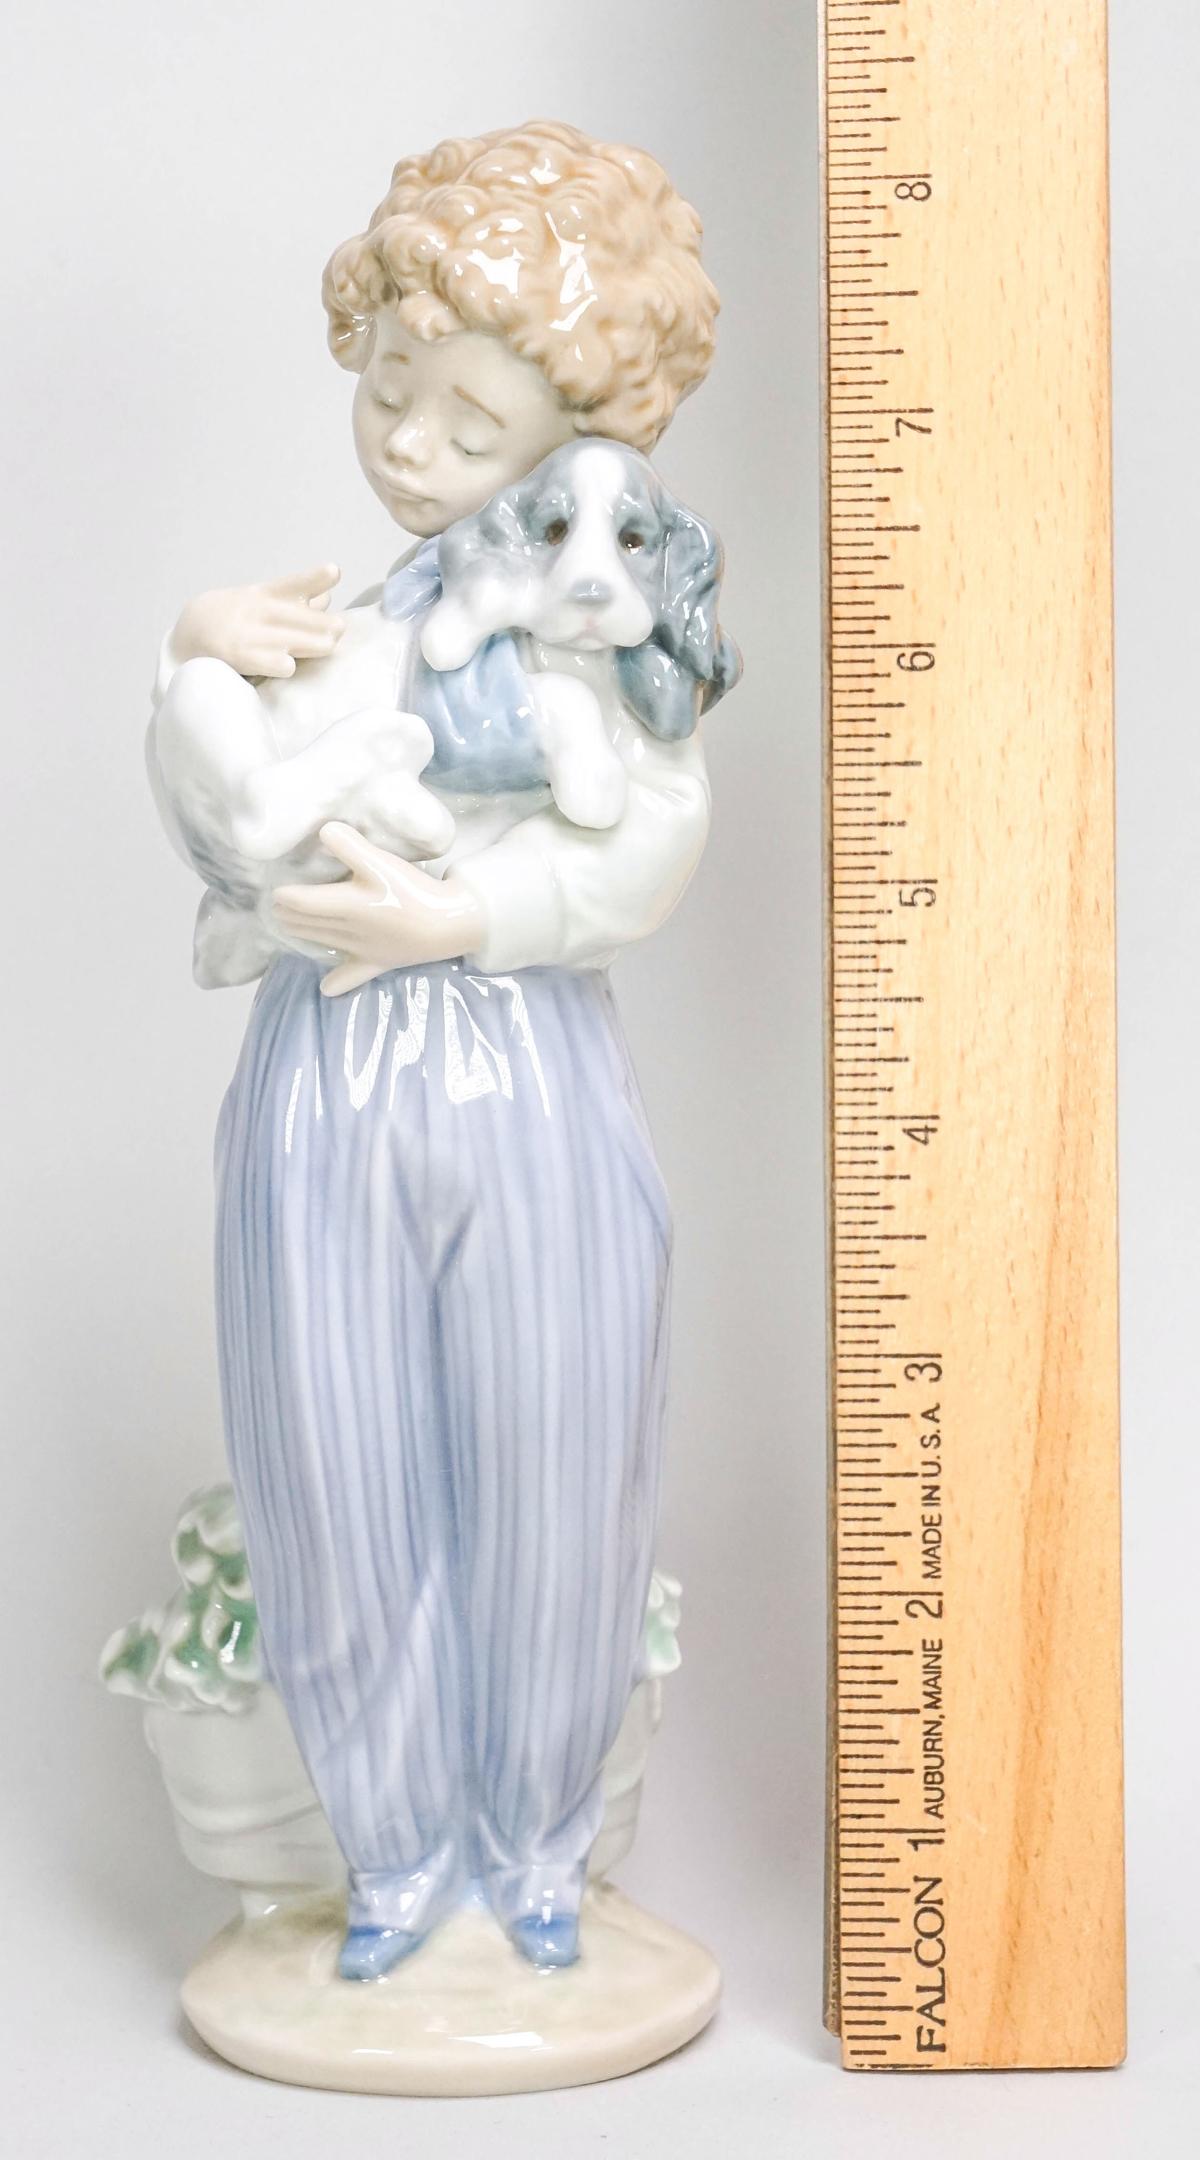 Lladro "My Buddy" Boy Holding Dog Porcelain Figurine W/Box, No.7.609